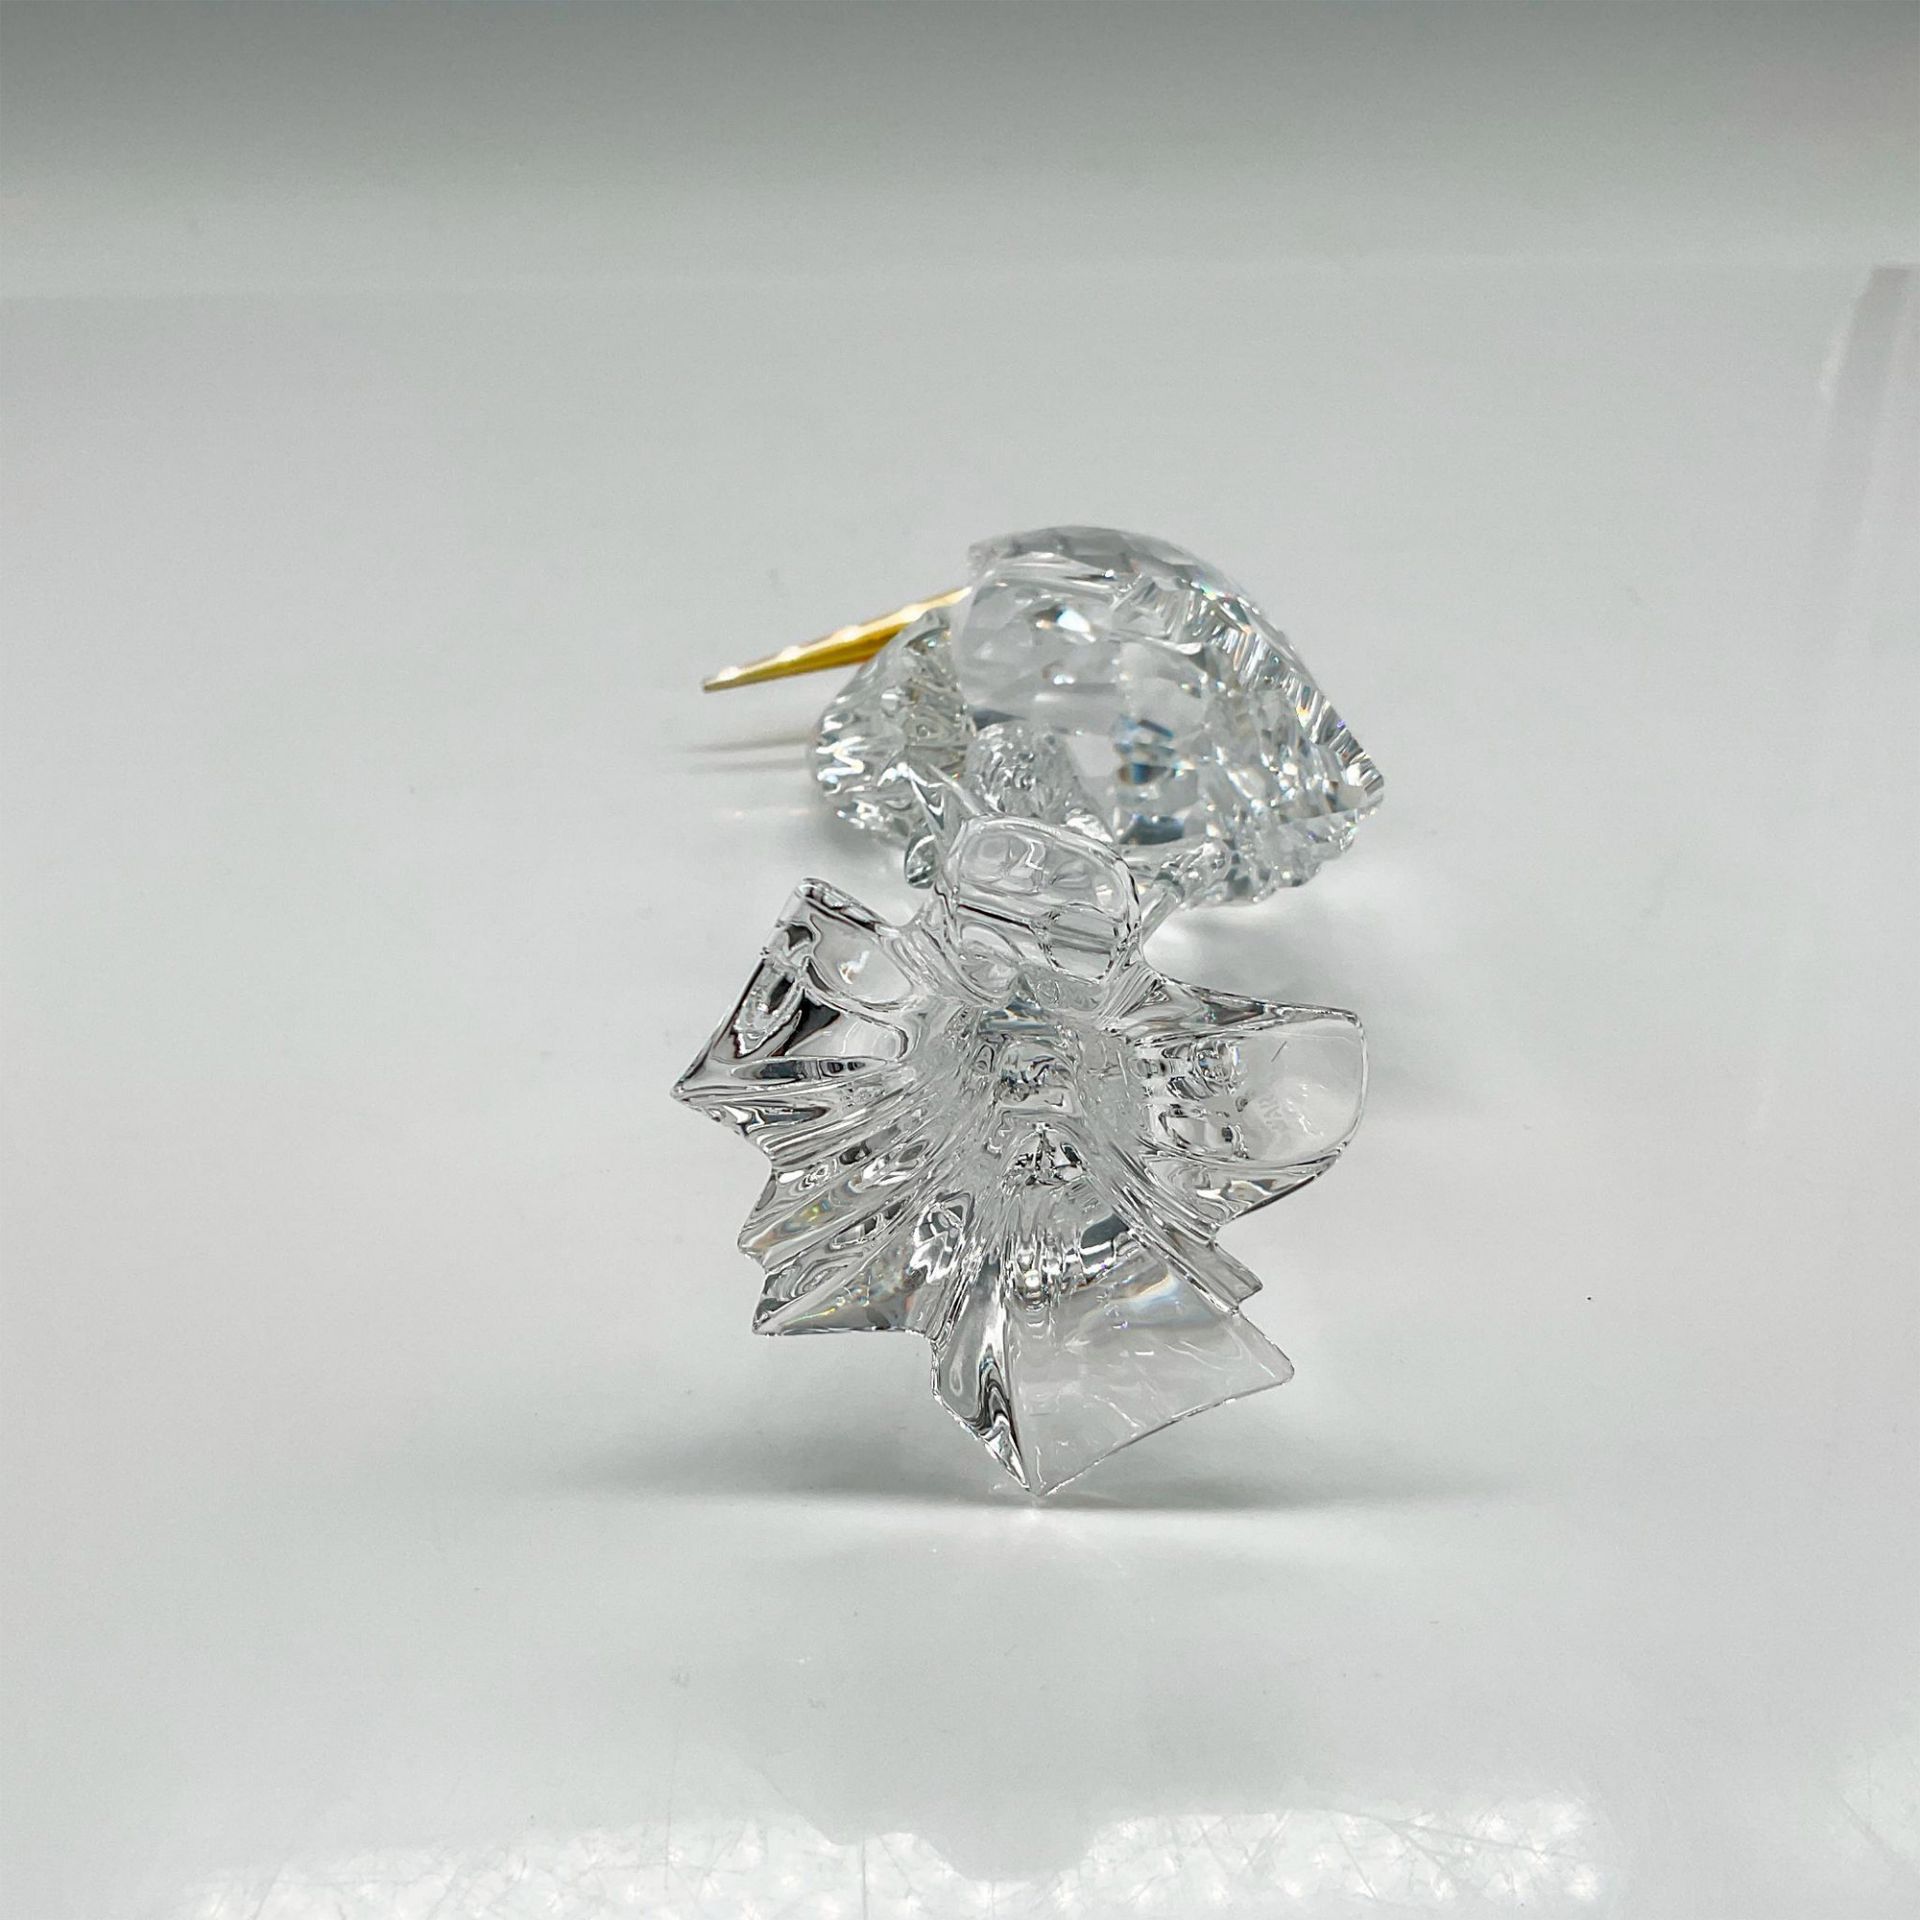 Swarovski Silver Crystal Figurine, Silver Heron - Image 3 of 4